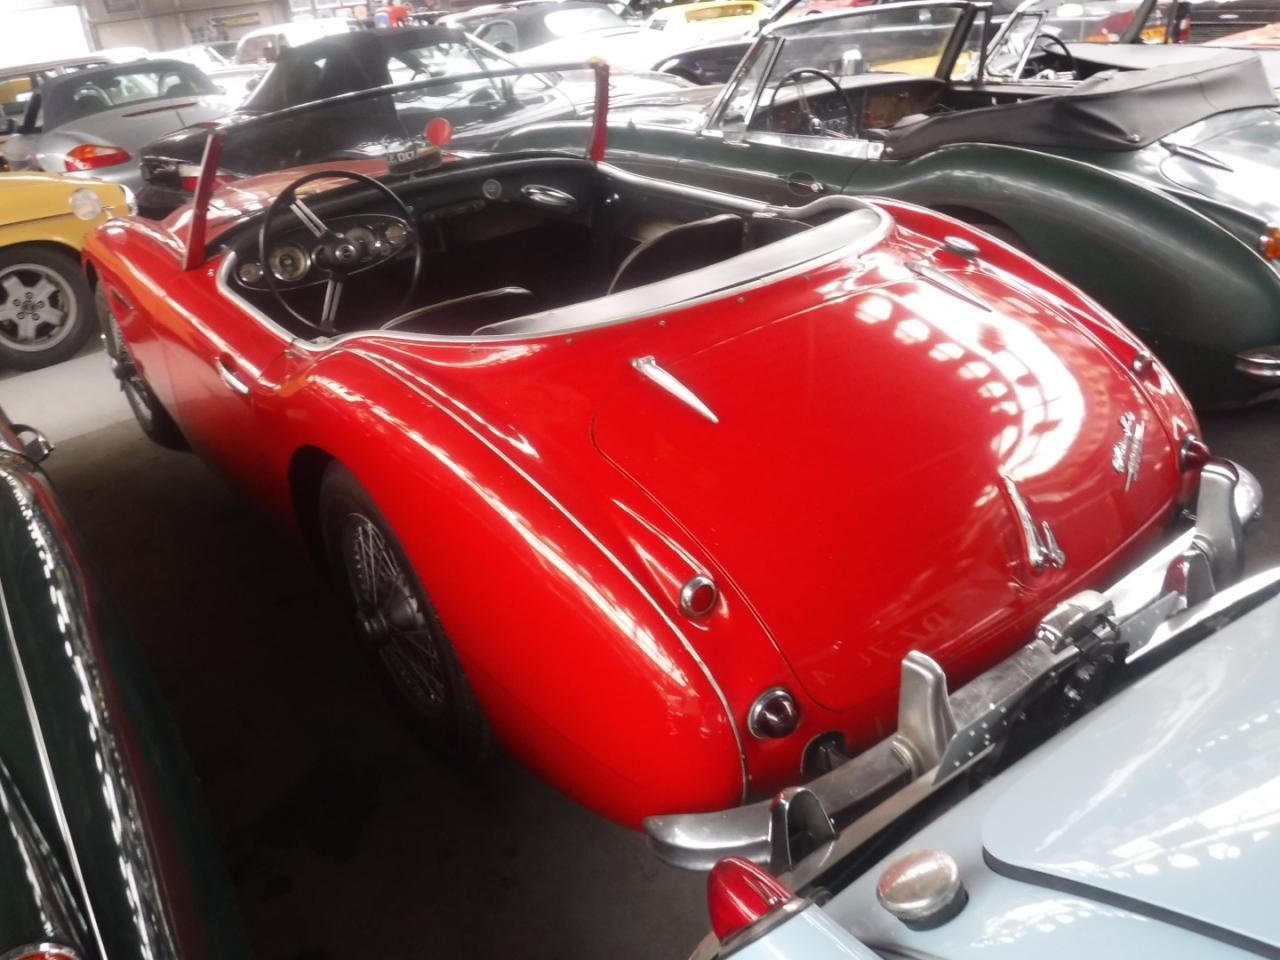 1960 Austin - Healey MK1 no.1623